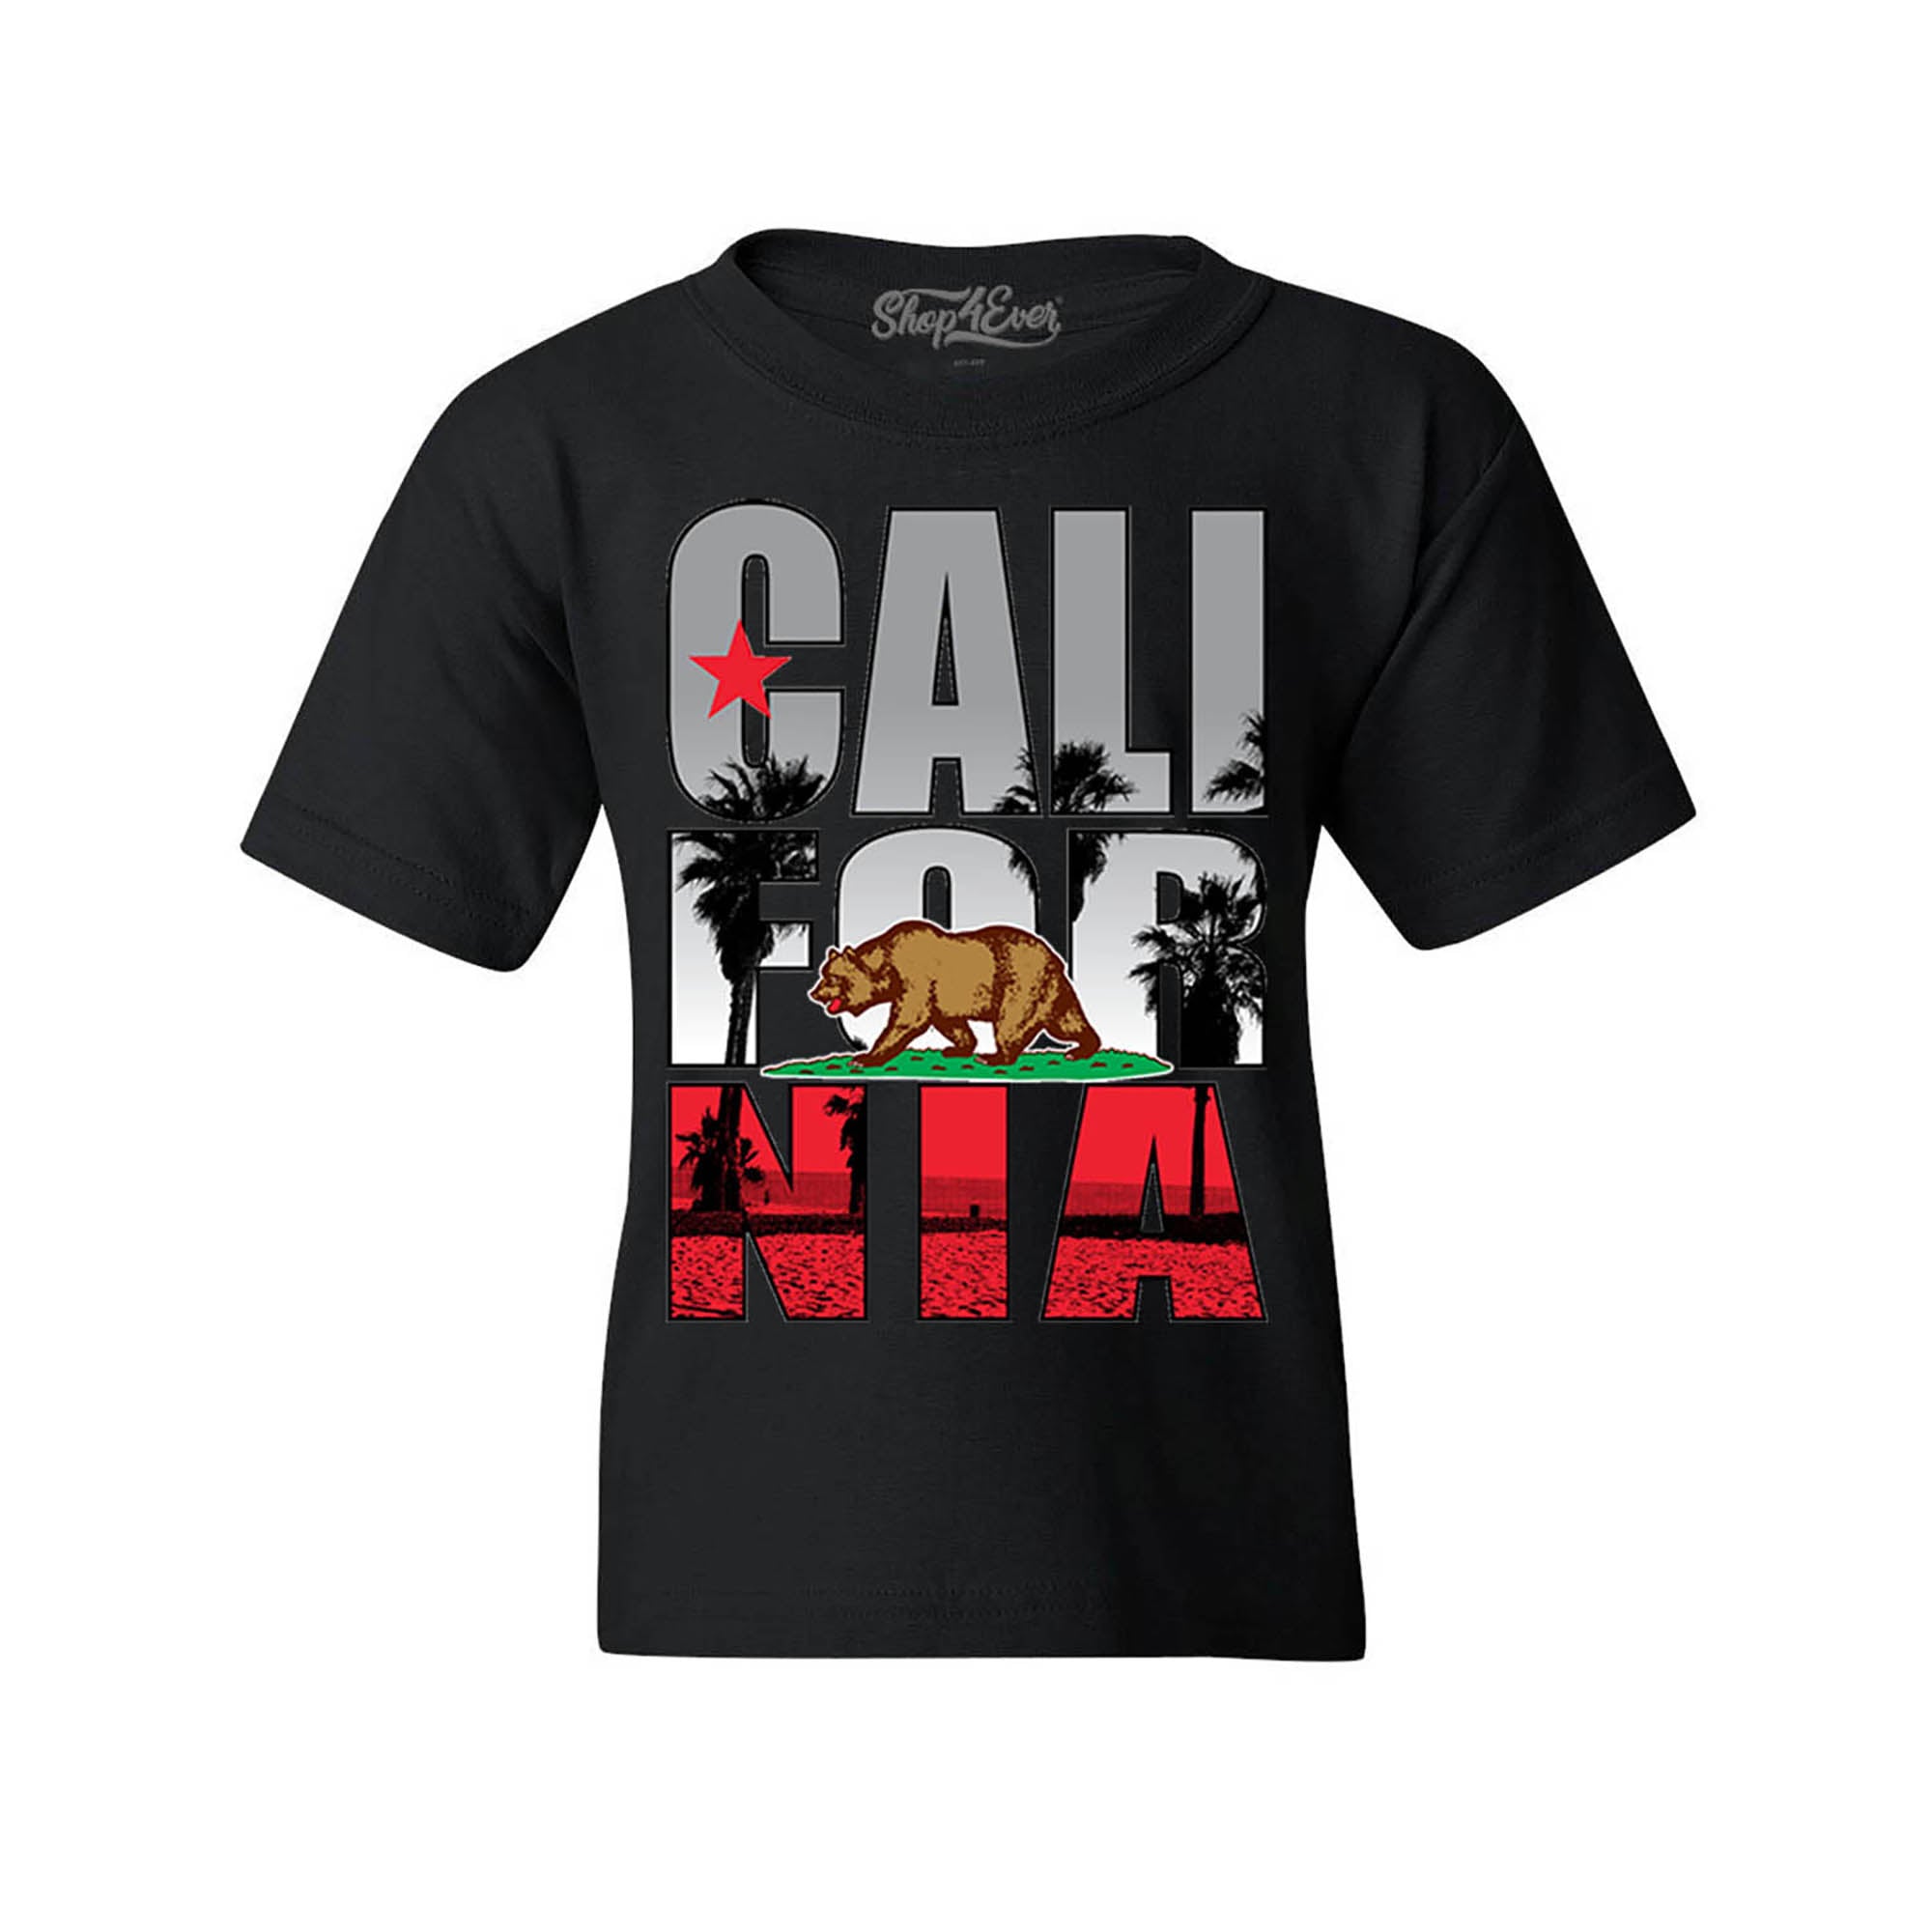 California Beach Palm Tree Youth's T-Shirt Child Kids Cali Flag Shirts